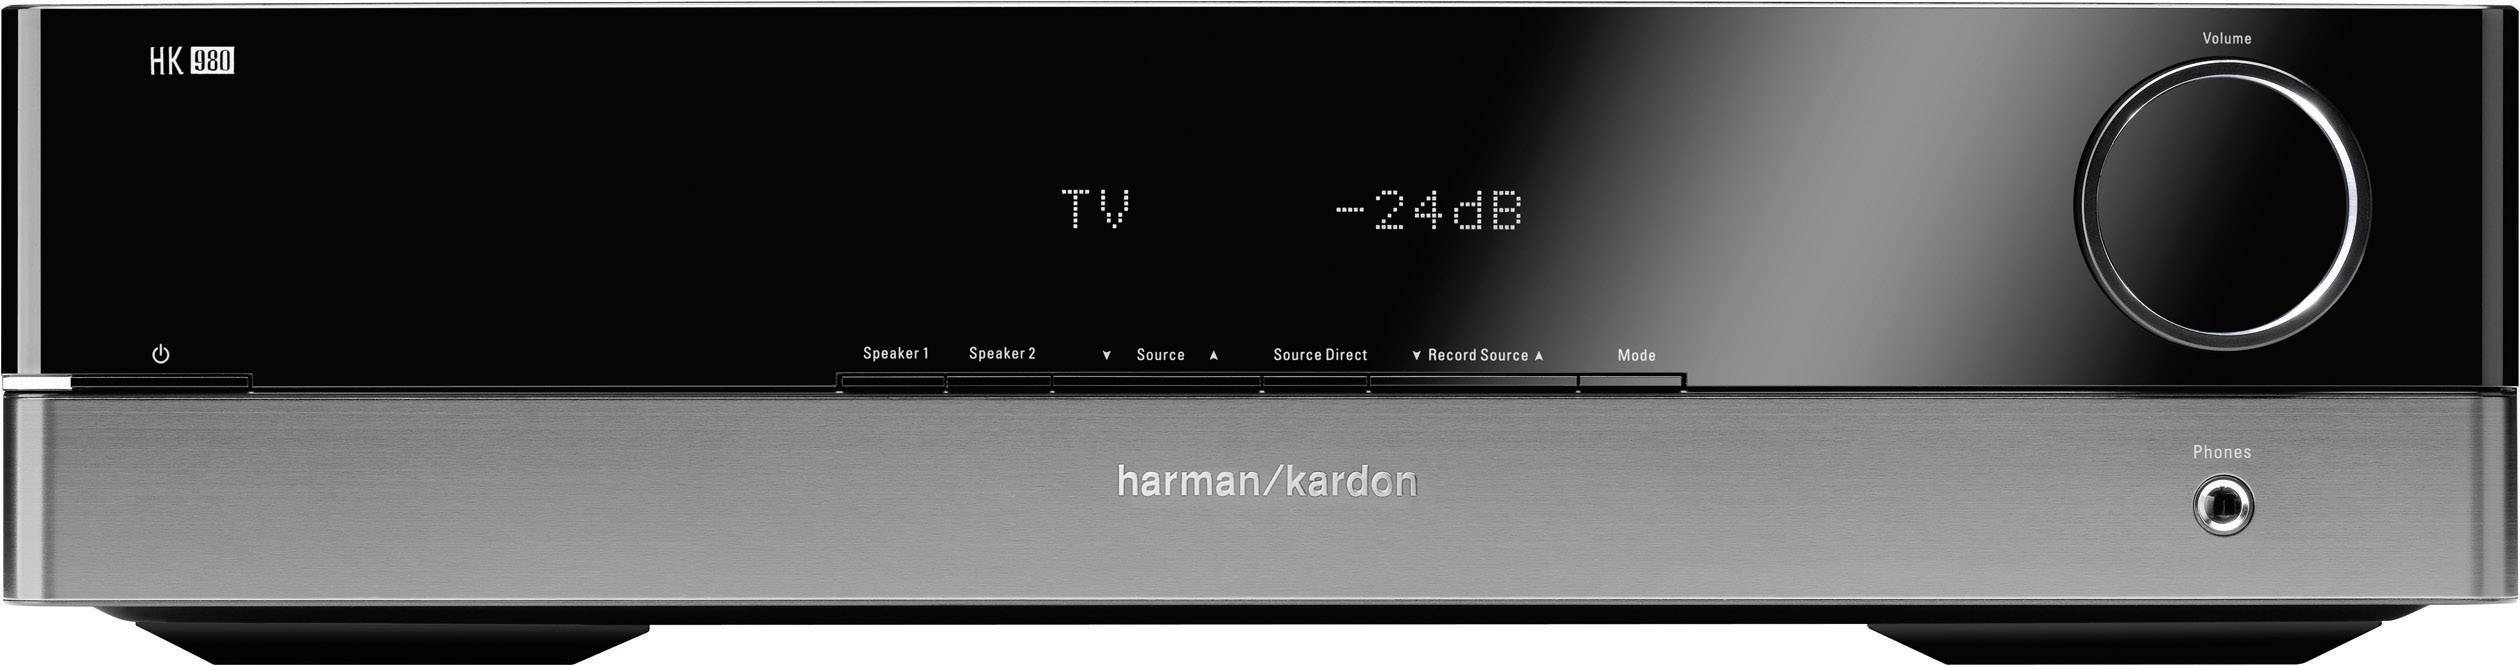 Harman Kardon HK980 (230)